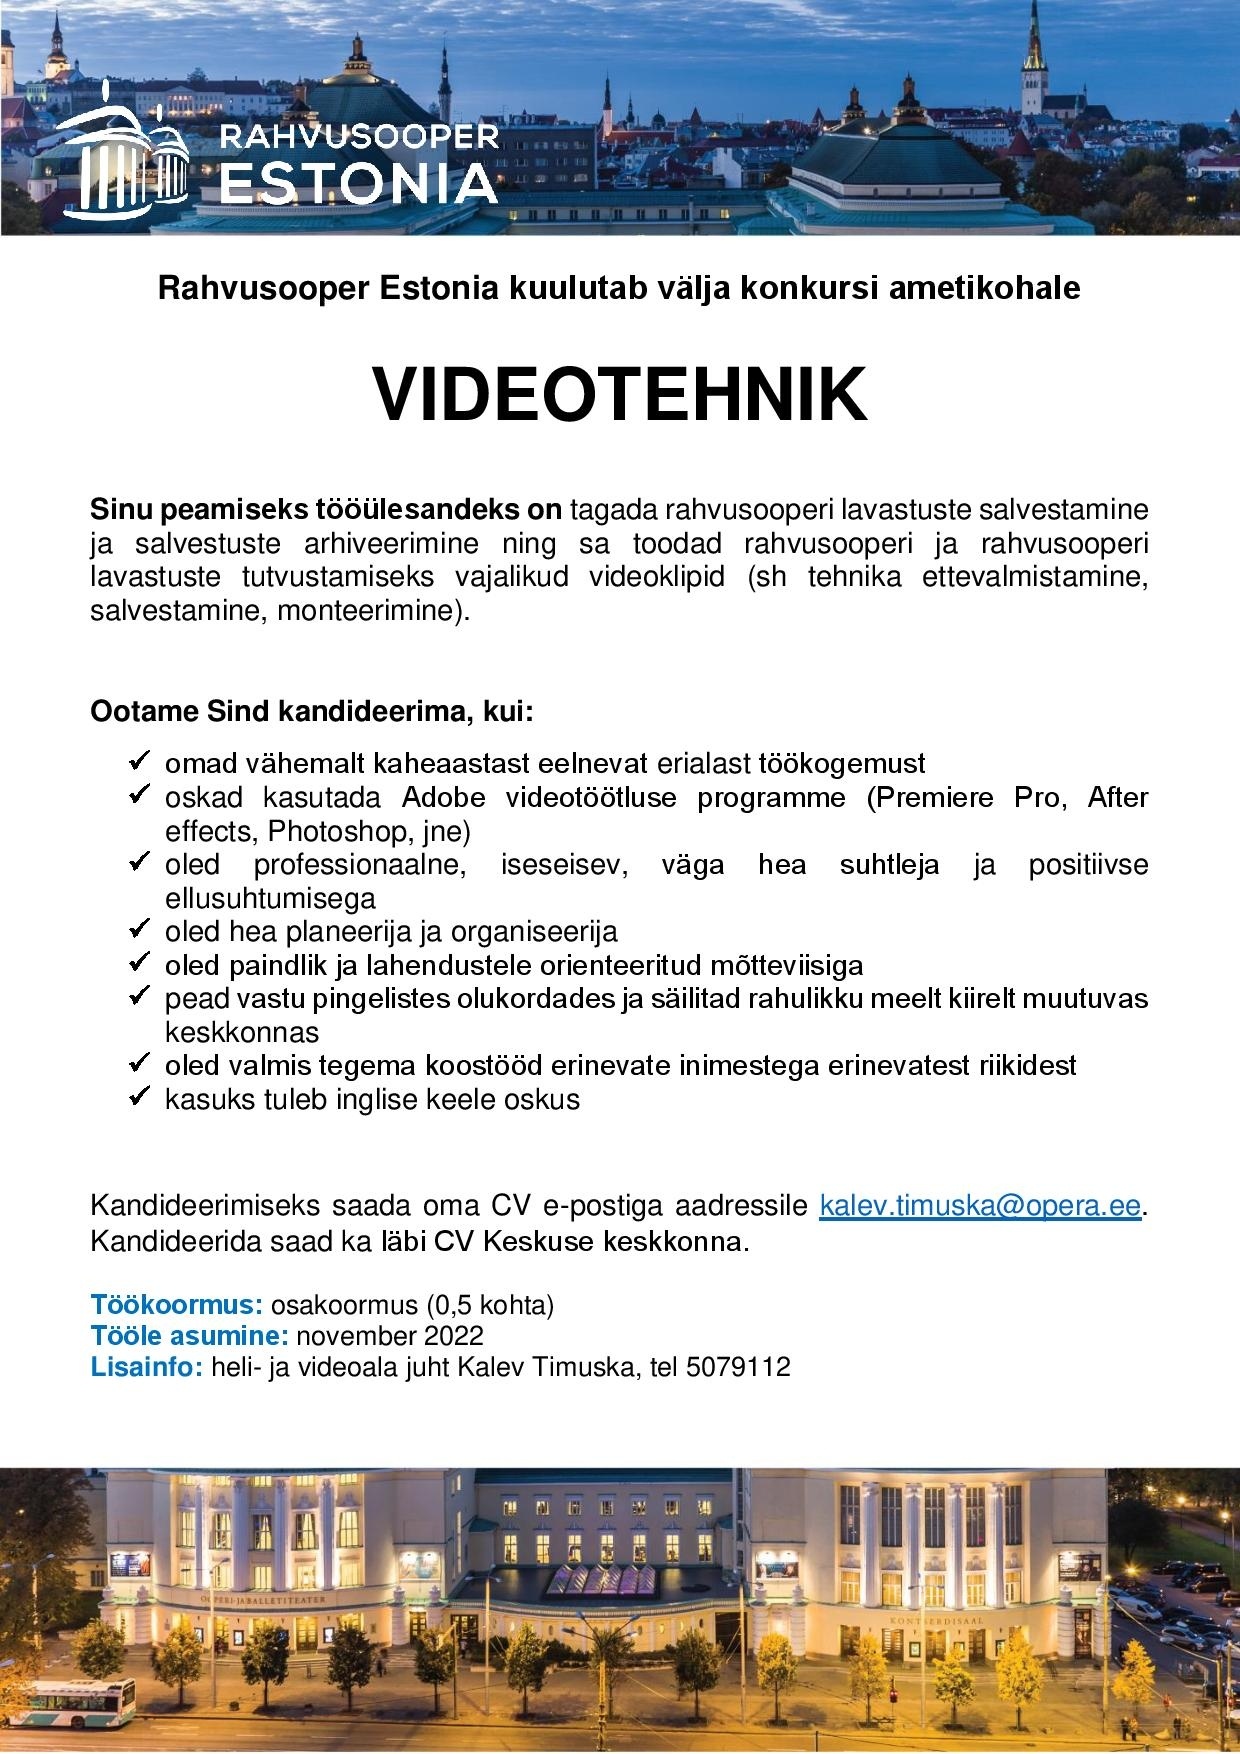 Rahvusooper Estonia Videotehnik